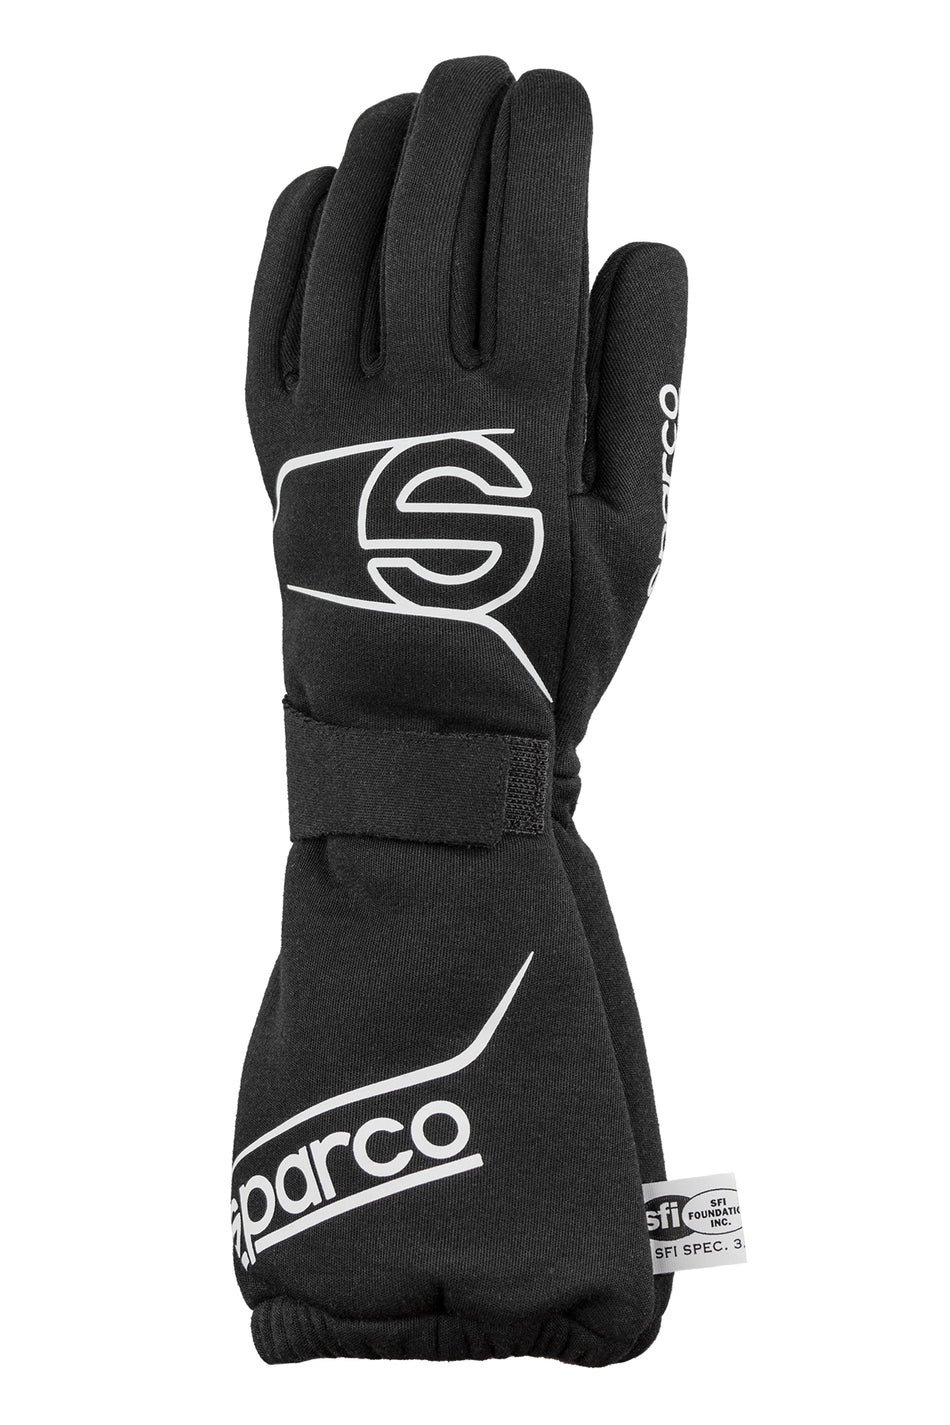 Sparco Wind SFI-20 Drag Glove - Black/White